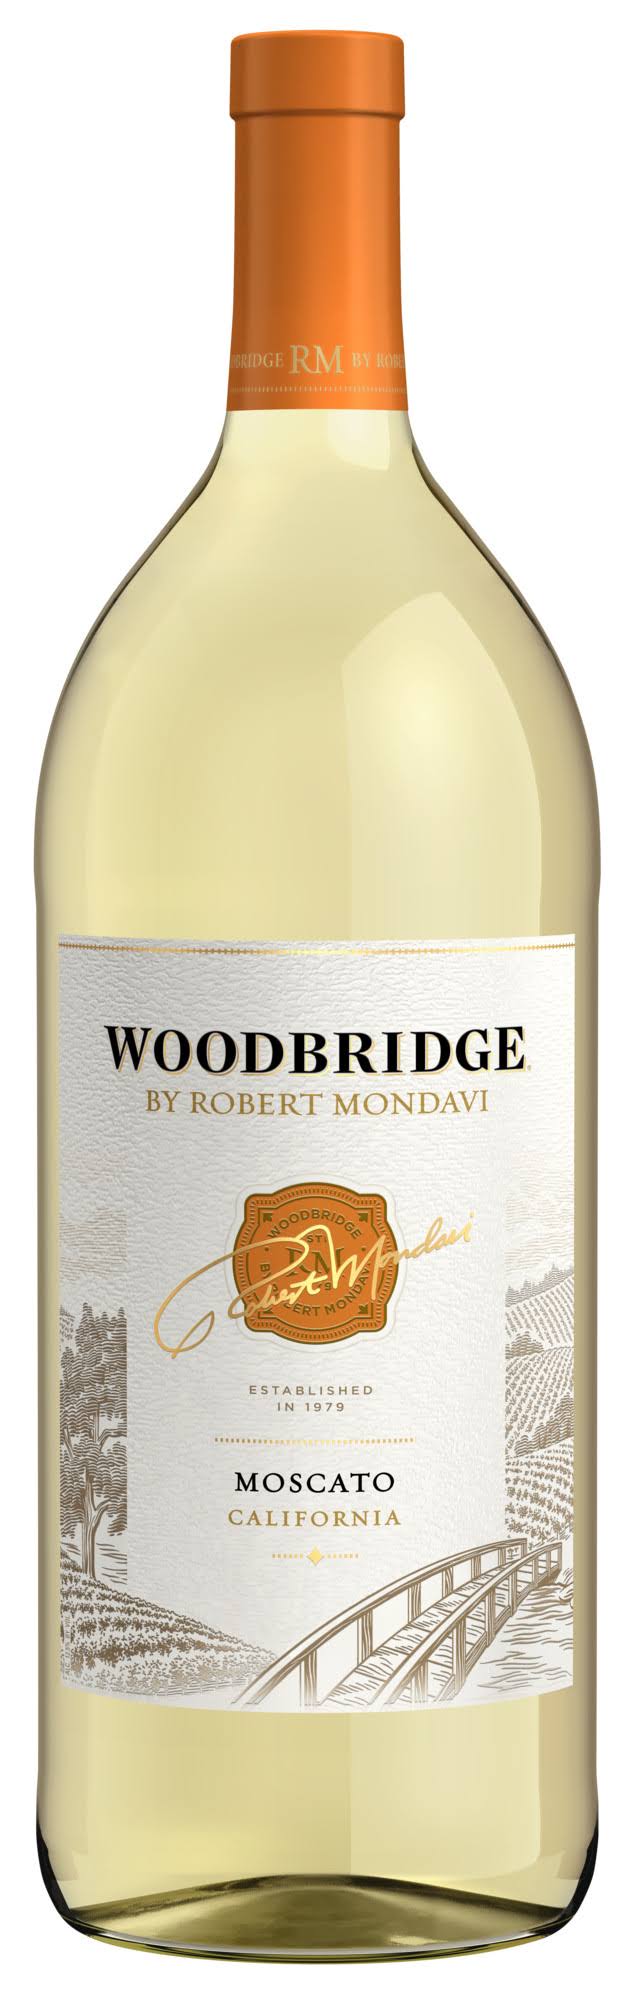 Woodbridge by Robert Mondavi Moscato Wine - California, USA